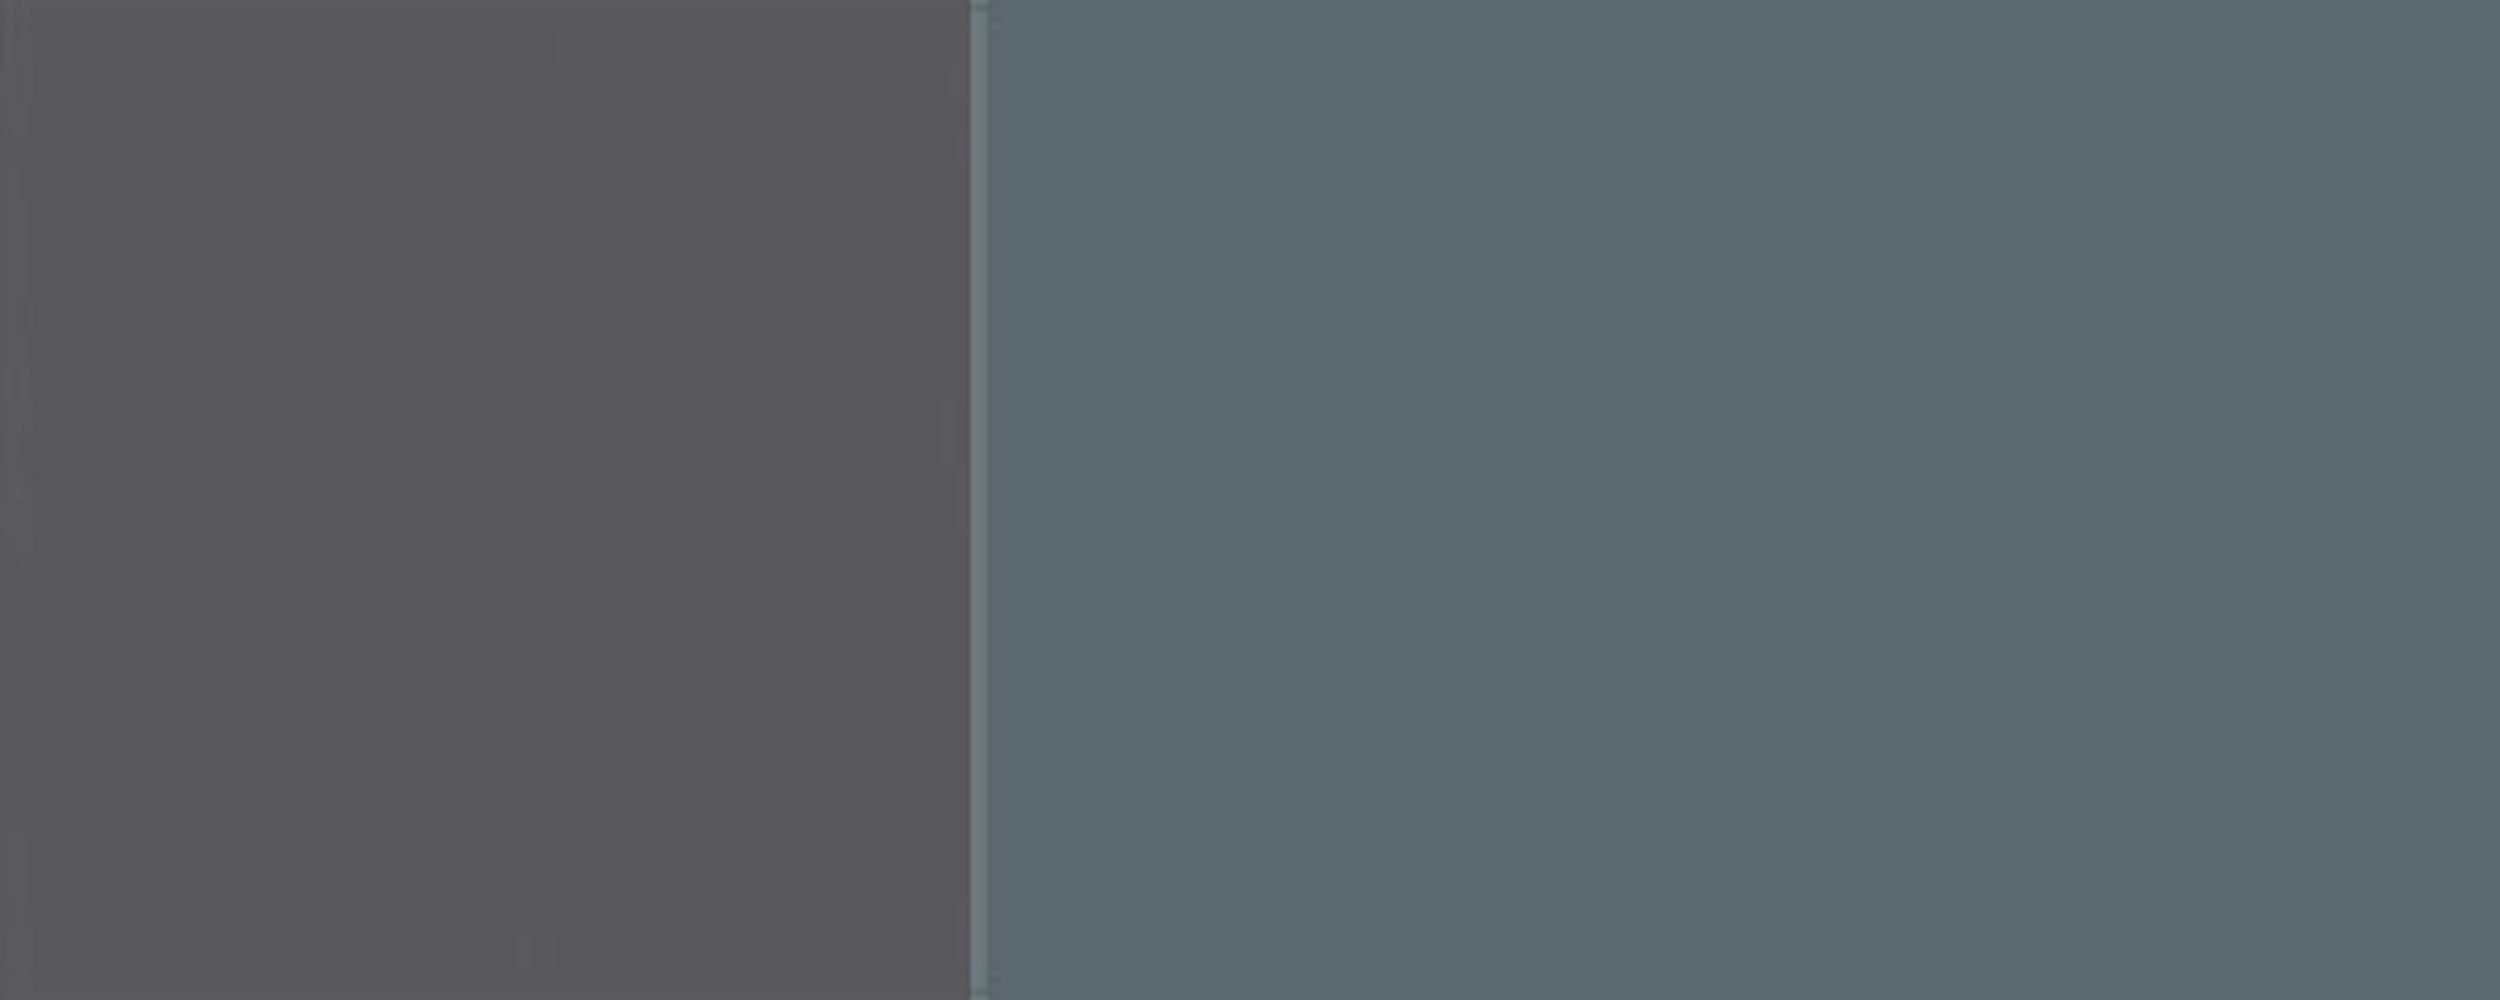 Feldmann-Wohnen blaugrau 2 (Florence) Korpusfarbe RAL & grifflos wählbar 60cm Schubladen Ausführung 7031 Front-, Backofenumbauschrank Hochglanz Florence